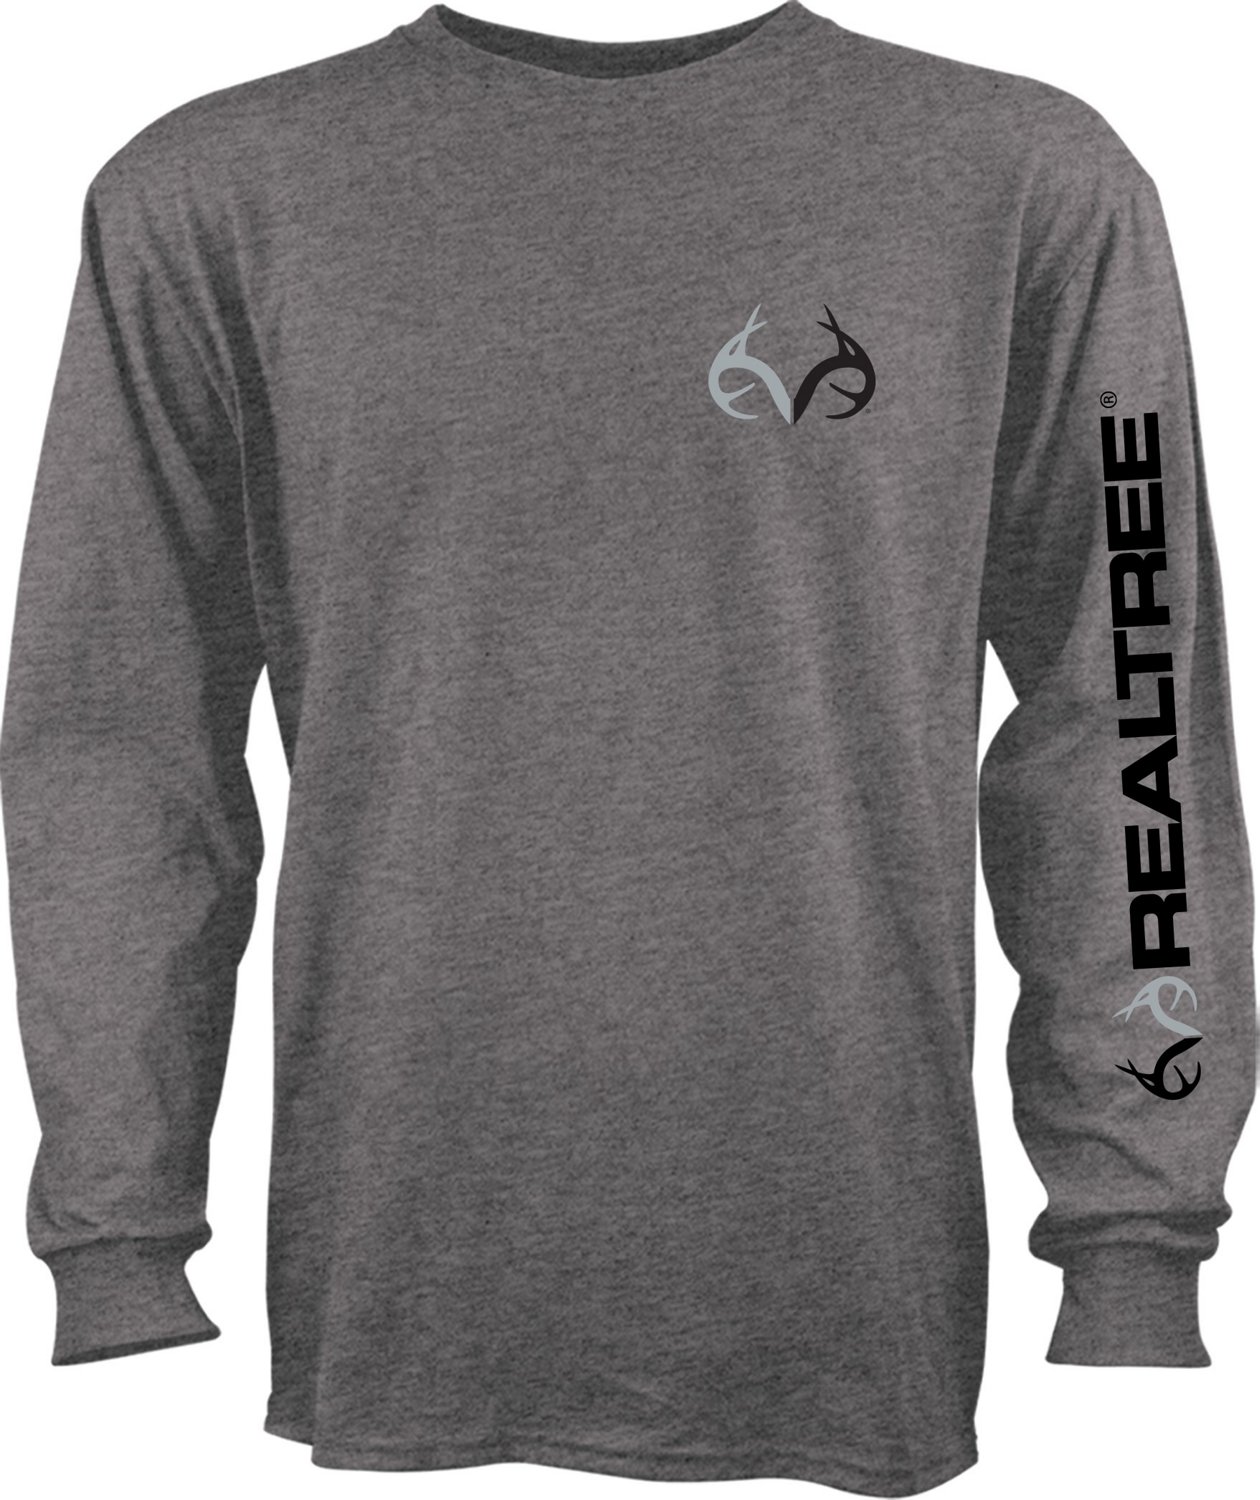 Realtree Men's Realtree Logo Long Sleeve T-shirt